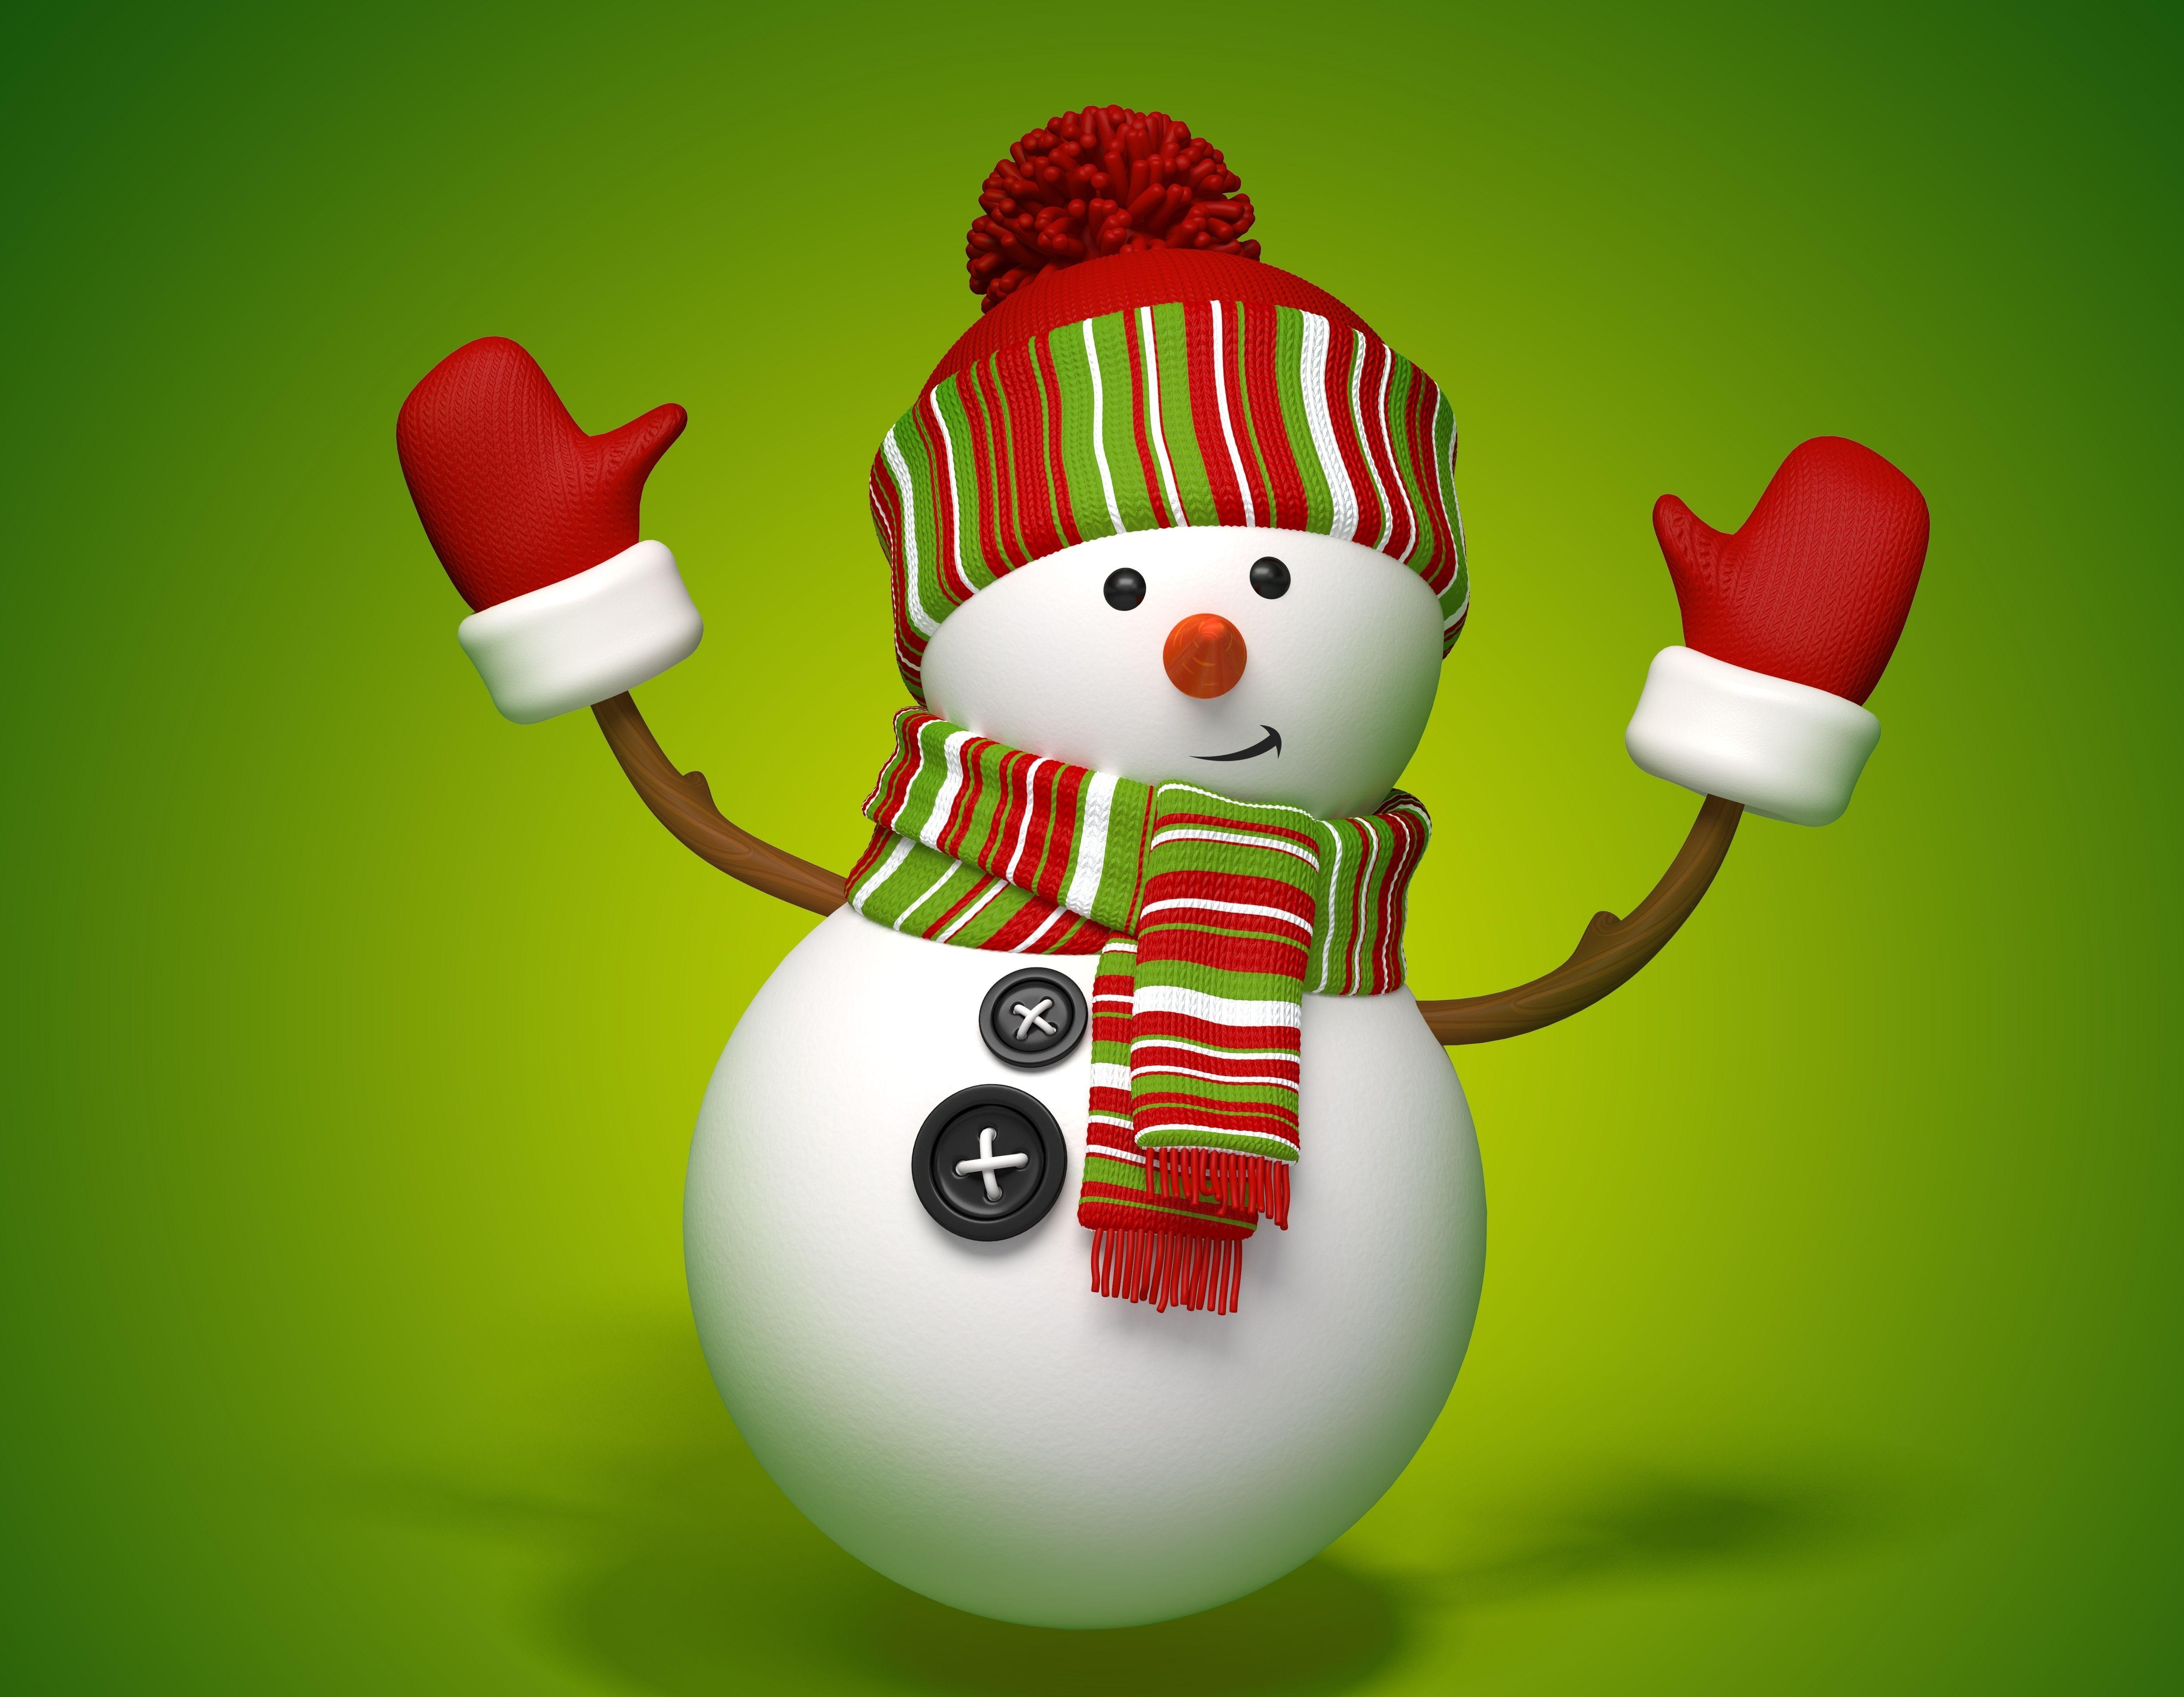 Cute Christmas Snowman Wallpapers - Top Free Cute Christmas Snowman ...